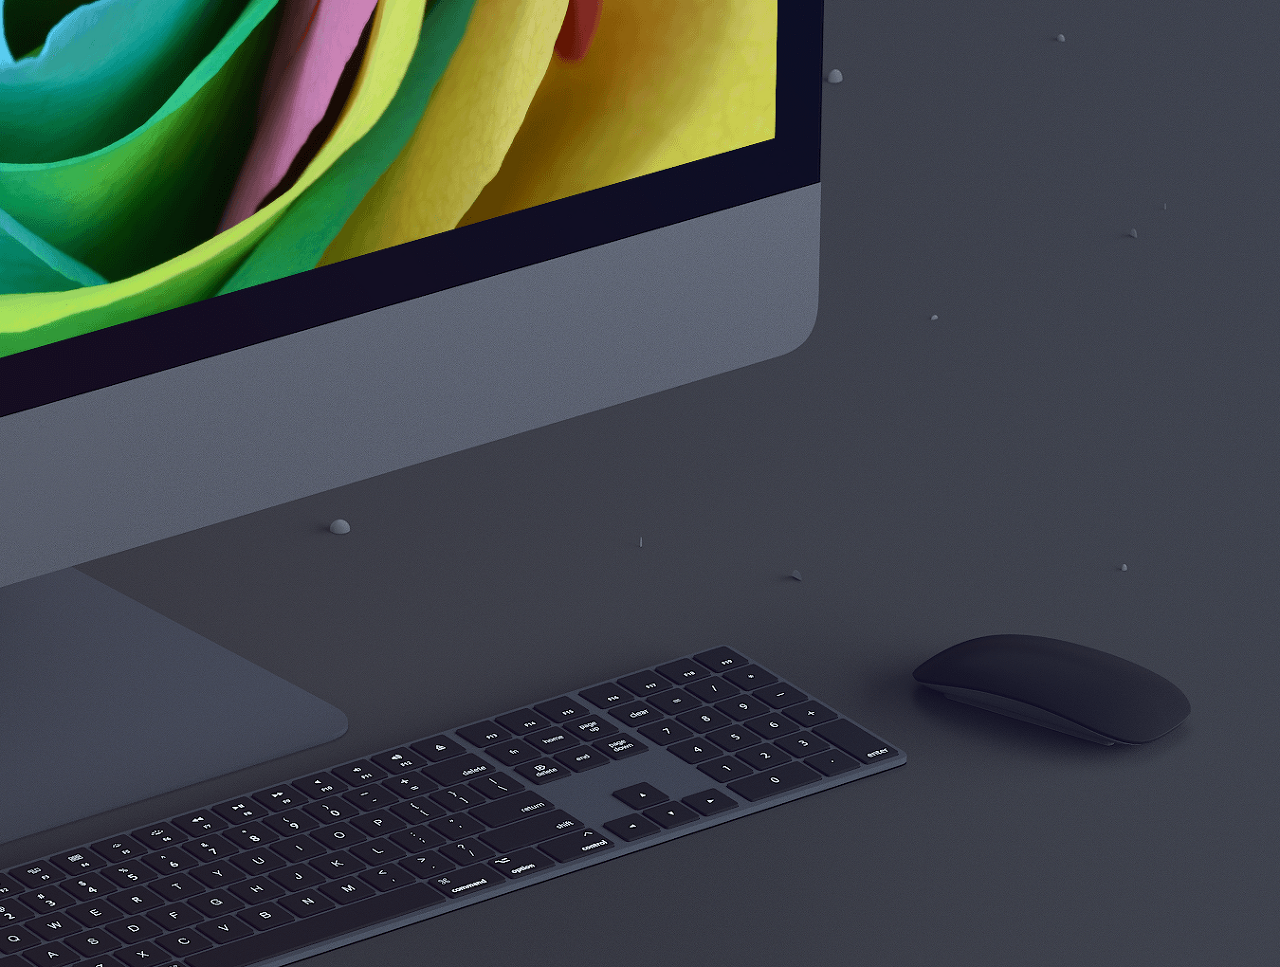 iMac Pro perspective mockups for Sketch & Photoshop 4K(Sketch & Photoshop 4K용 iMac Pro 투시 목업)